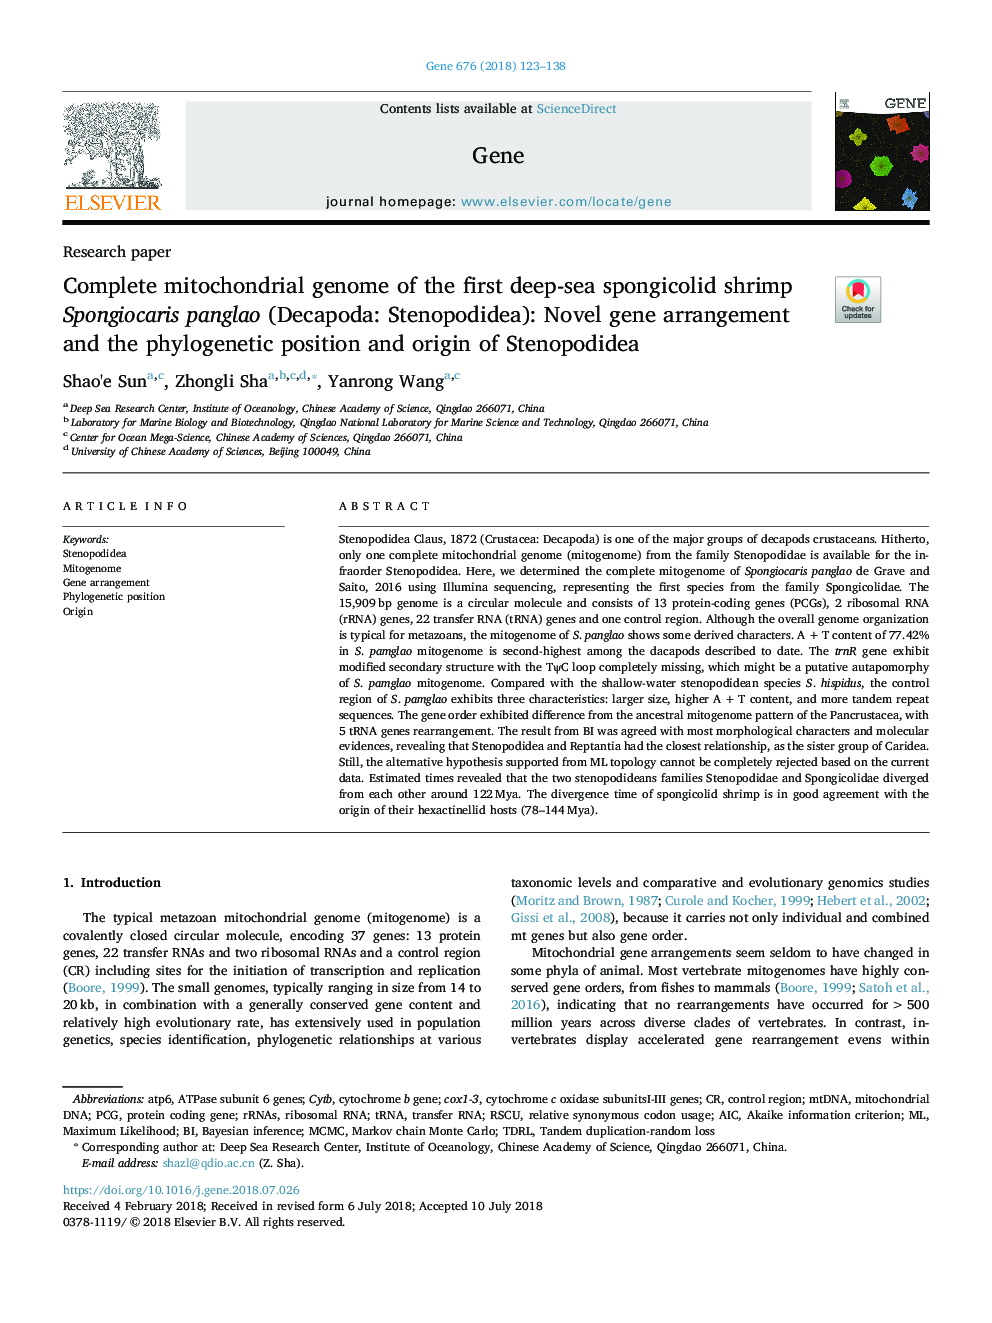 Complete mitochondrial genome of the first deep-sea spongicolid shrimp Spongiocaris panglao (Decapoda: Stenopodidea): Novel gene arrangement and the phylogenetic position and origin of Stenopodidea